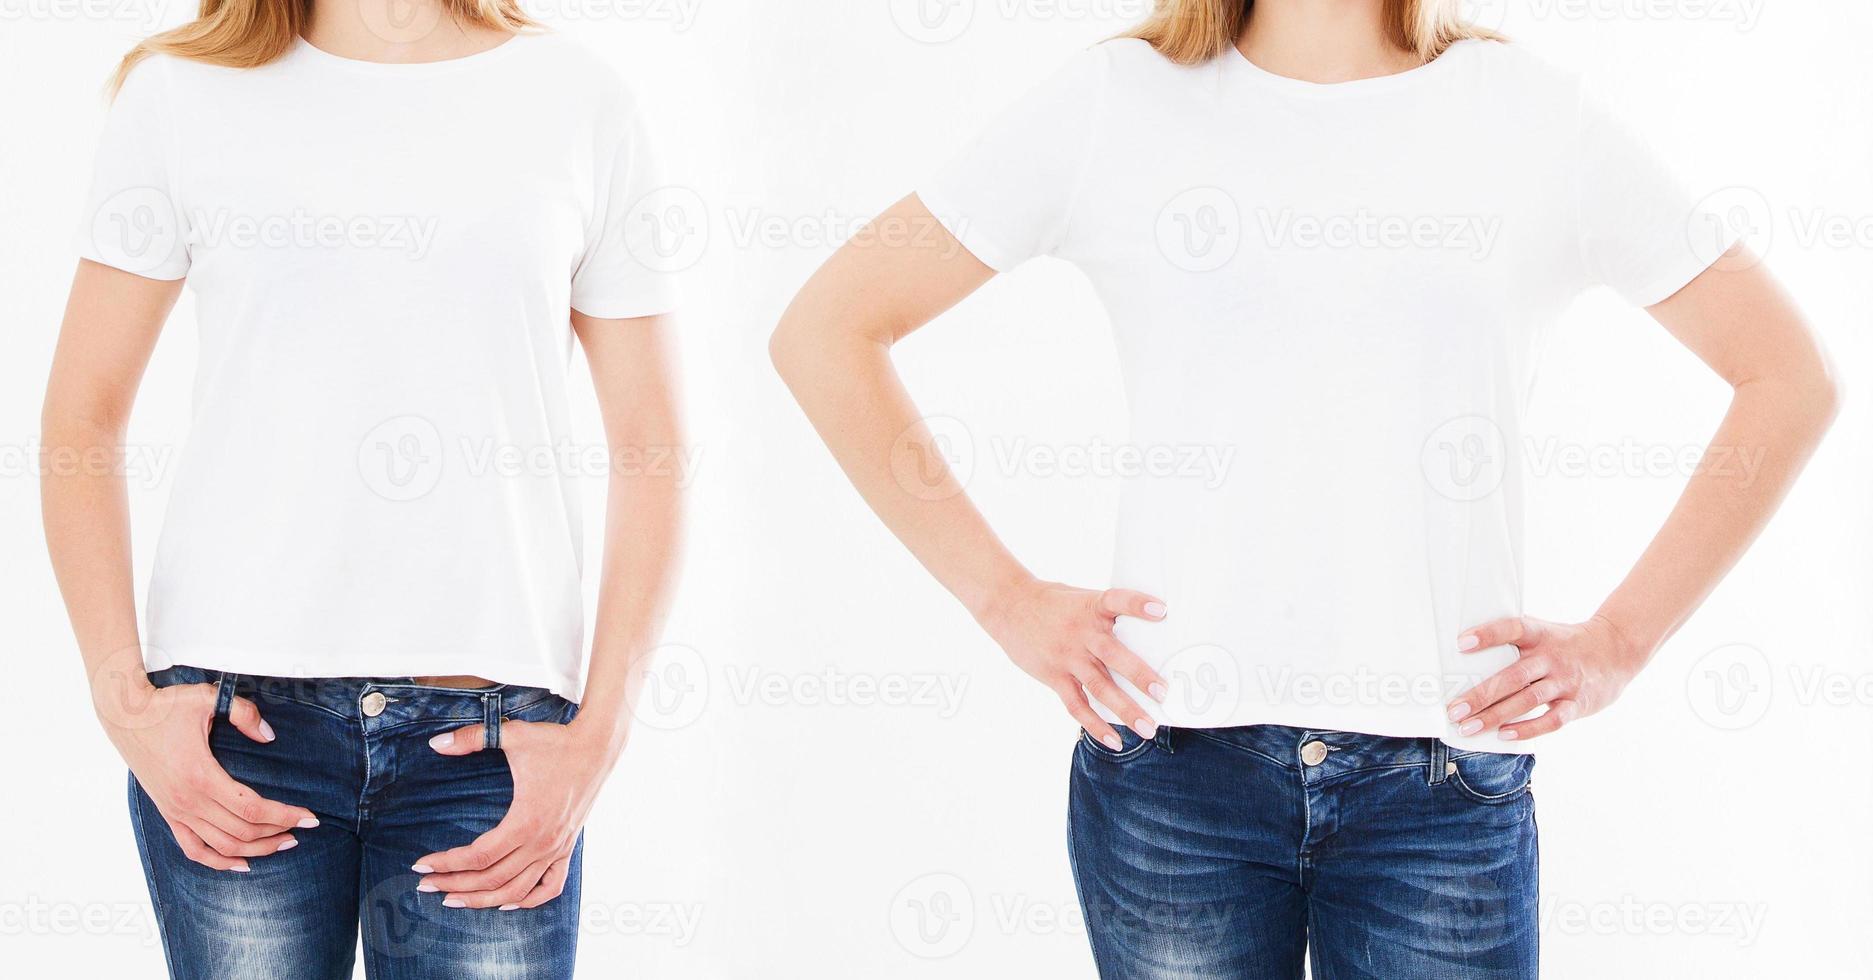 weißes t-shirt der frau, set zwei mädchen, mock up, kopierraum foto